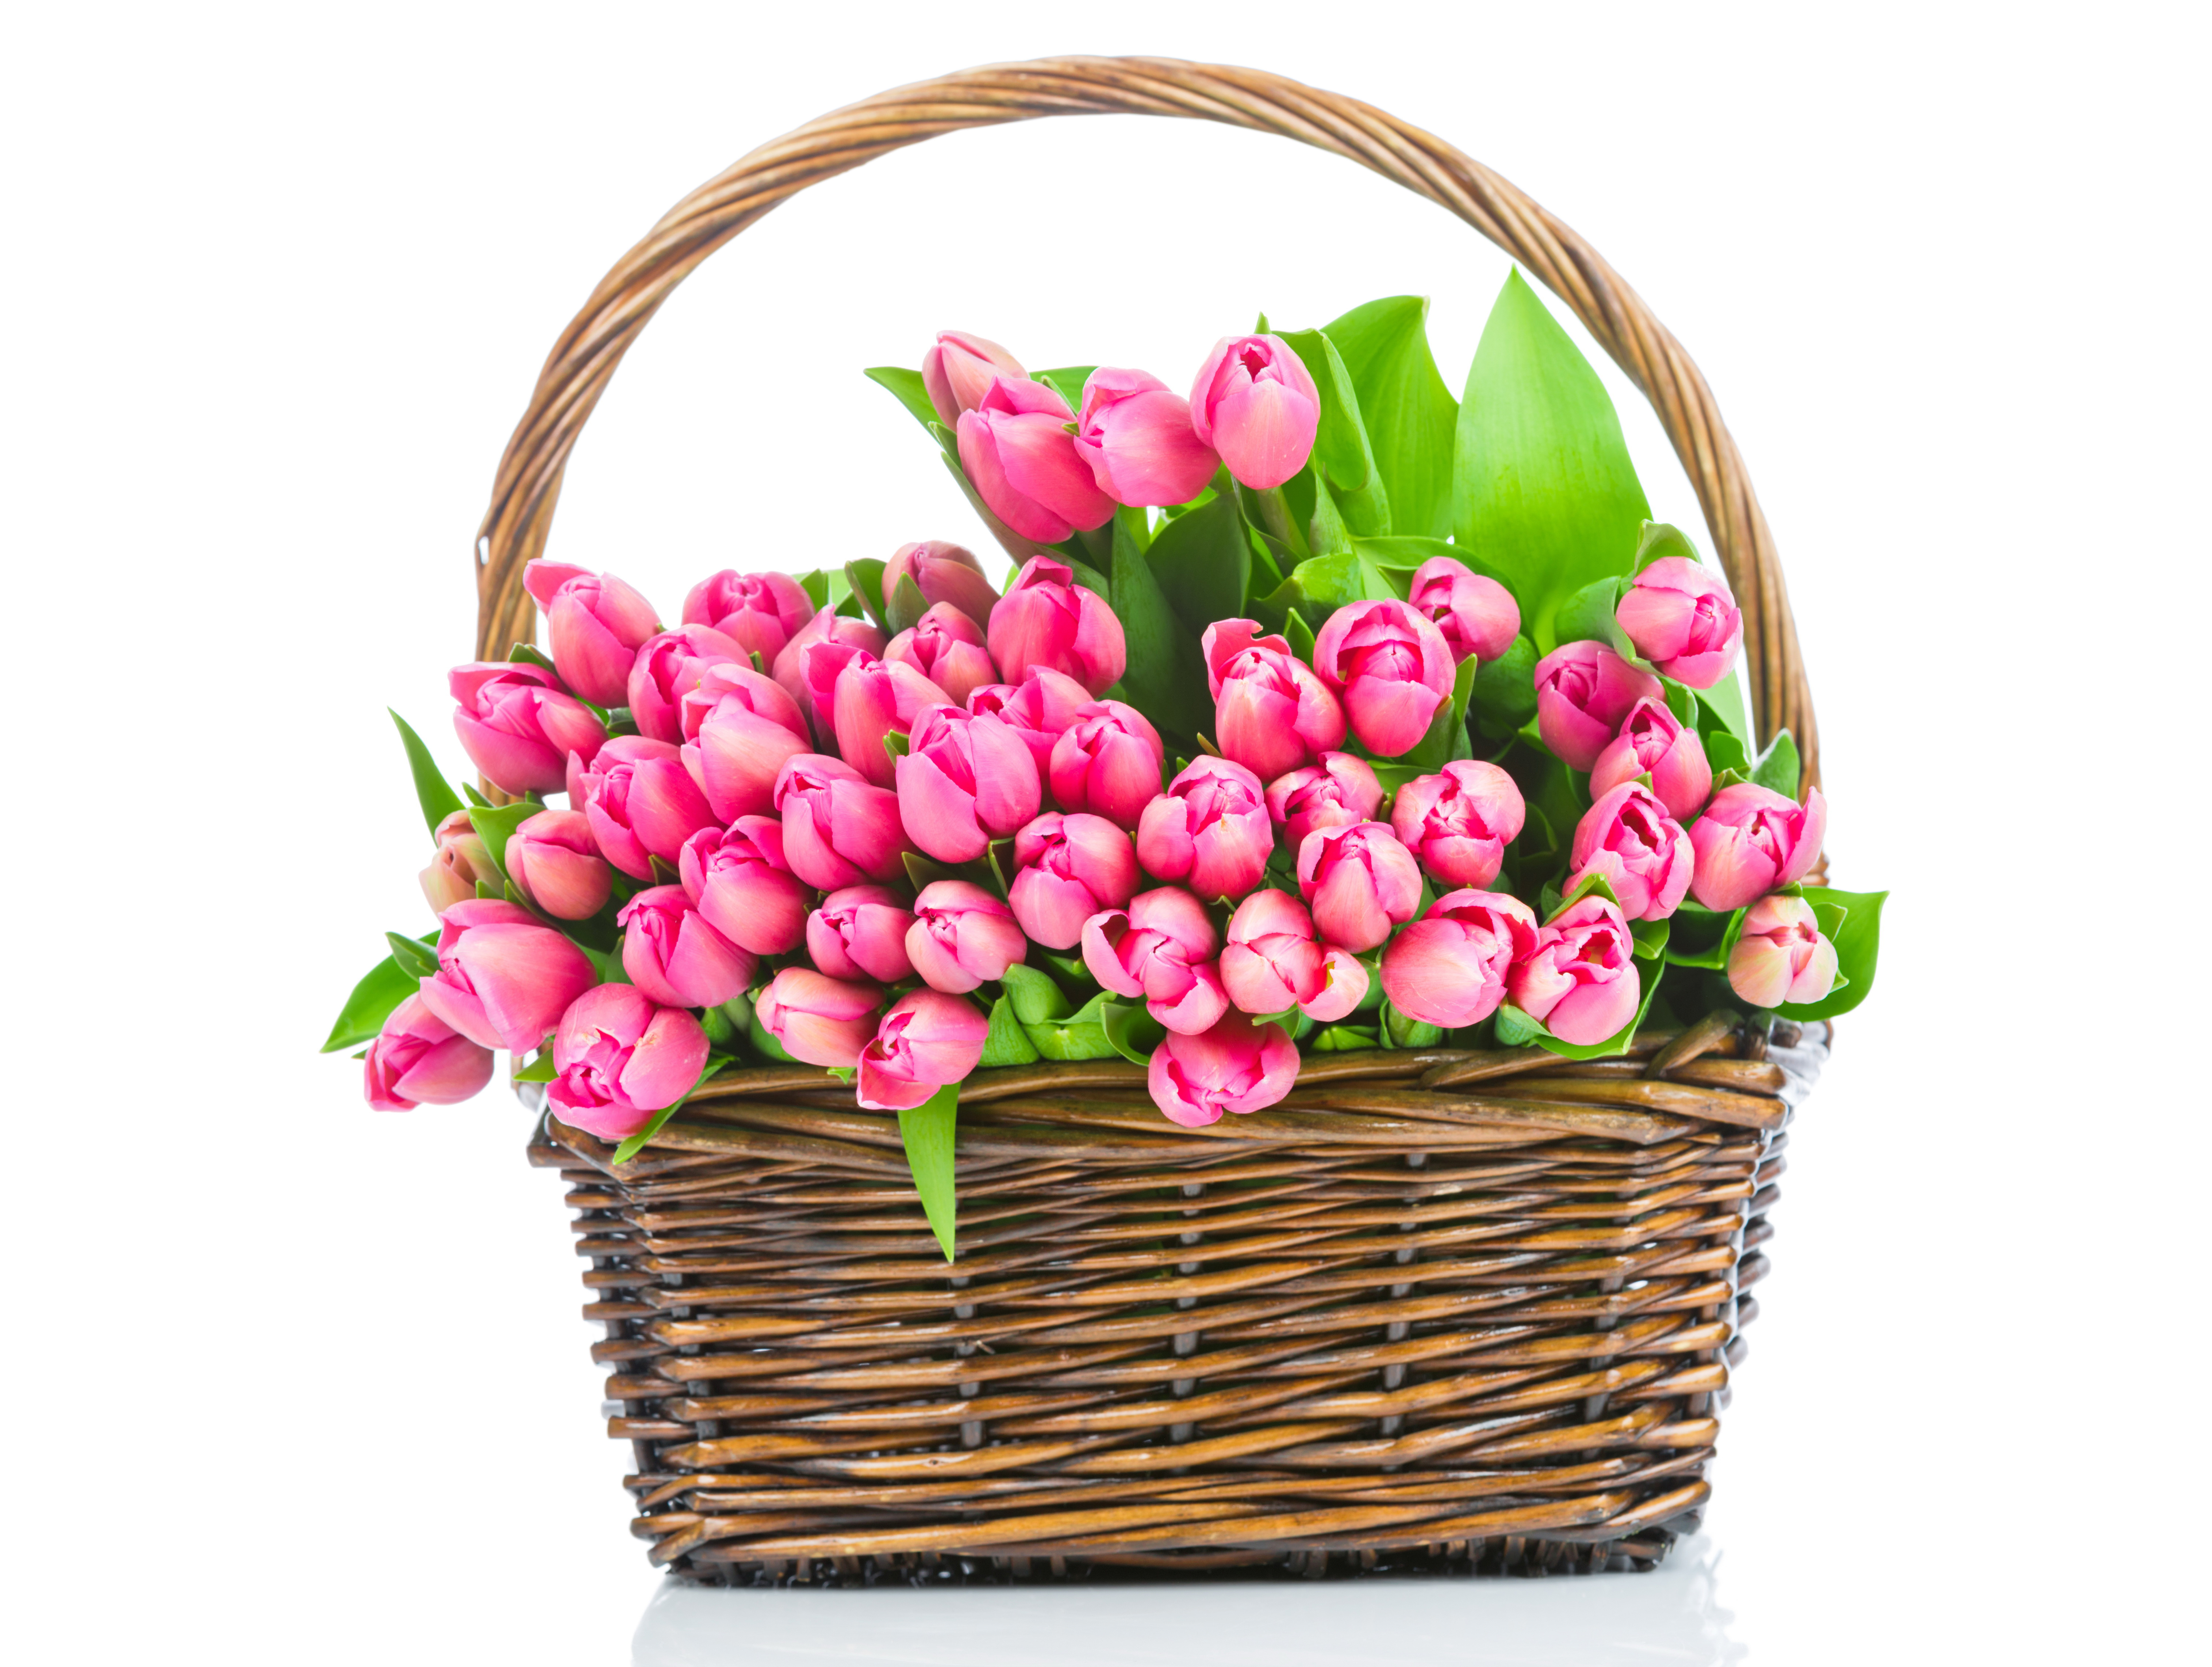 Тюльпаны в корзине картинки. Корзина с тюльпанами. Корзина с весенними цветами. Букет тюльпанов. Корзина цветов «Весенняя».